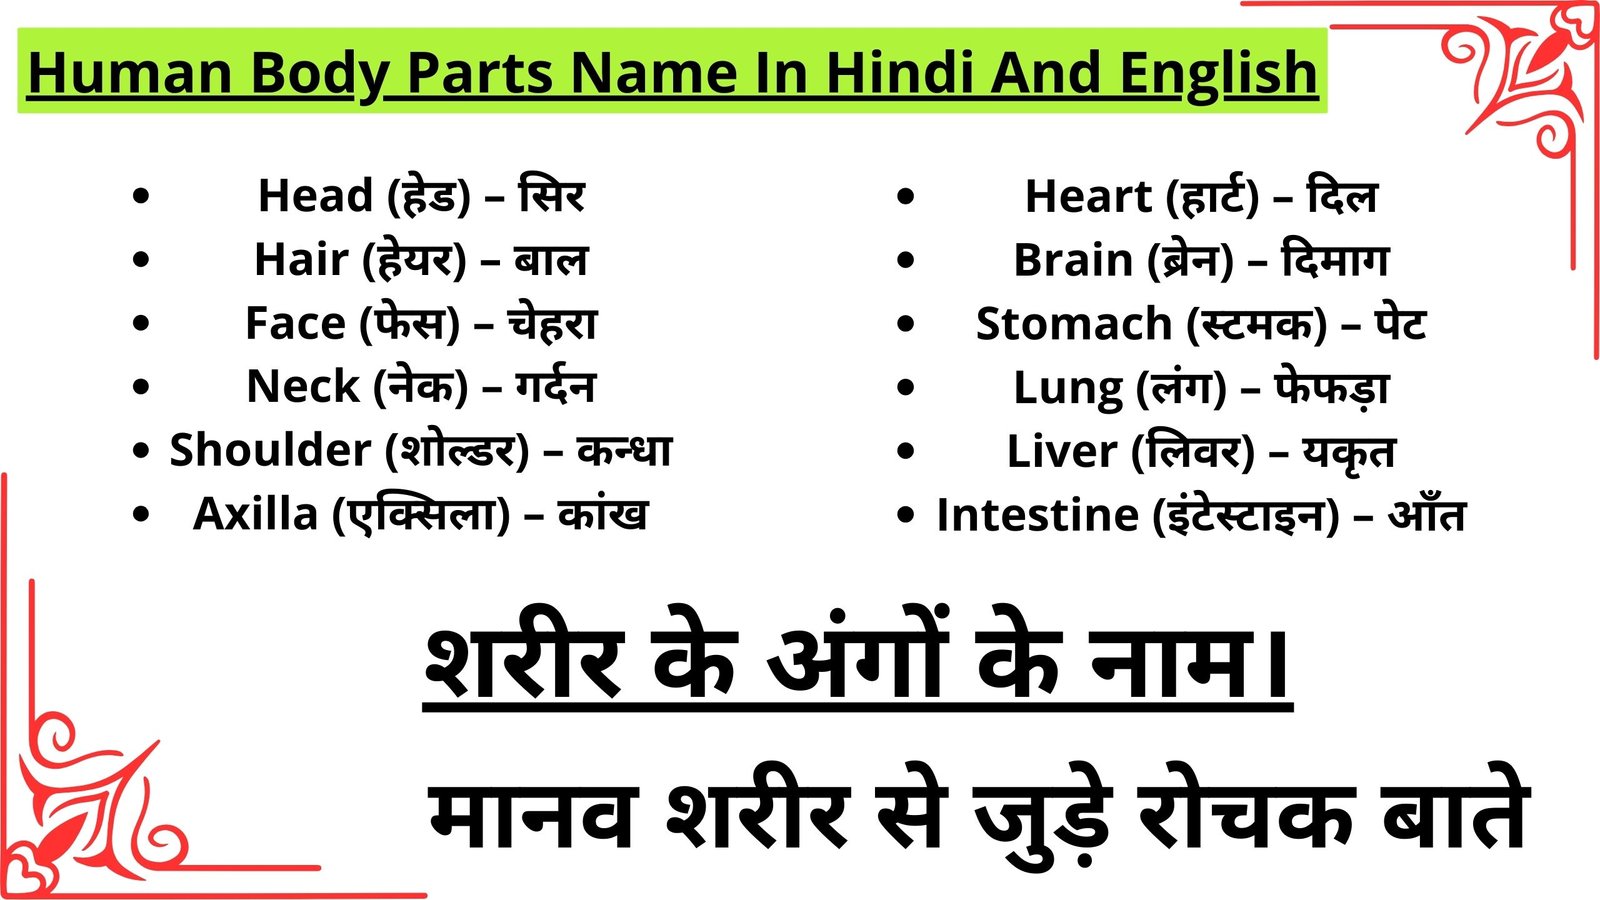 Human Body Parts Name In Hindi And English - शरीर के अंगों के नाम।